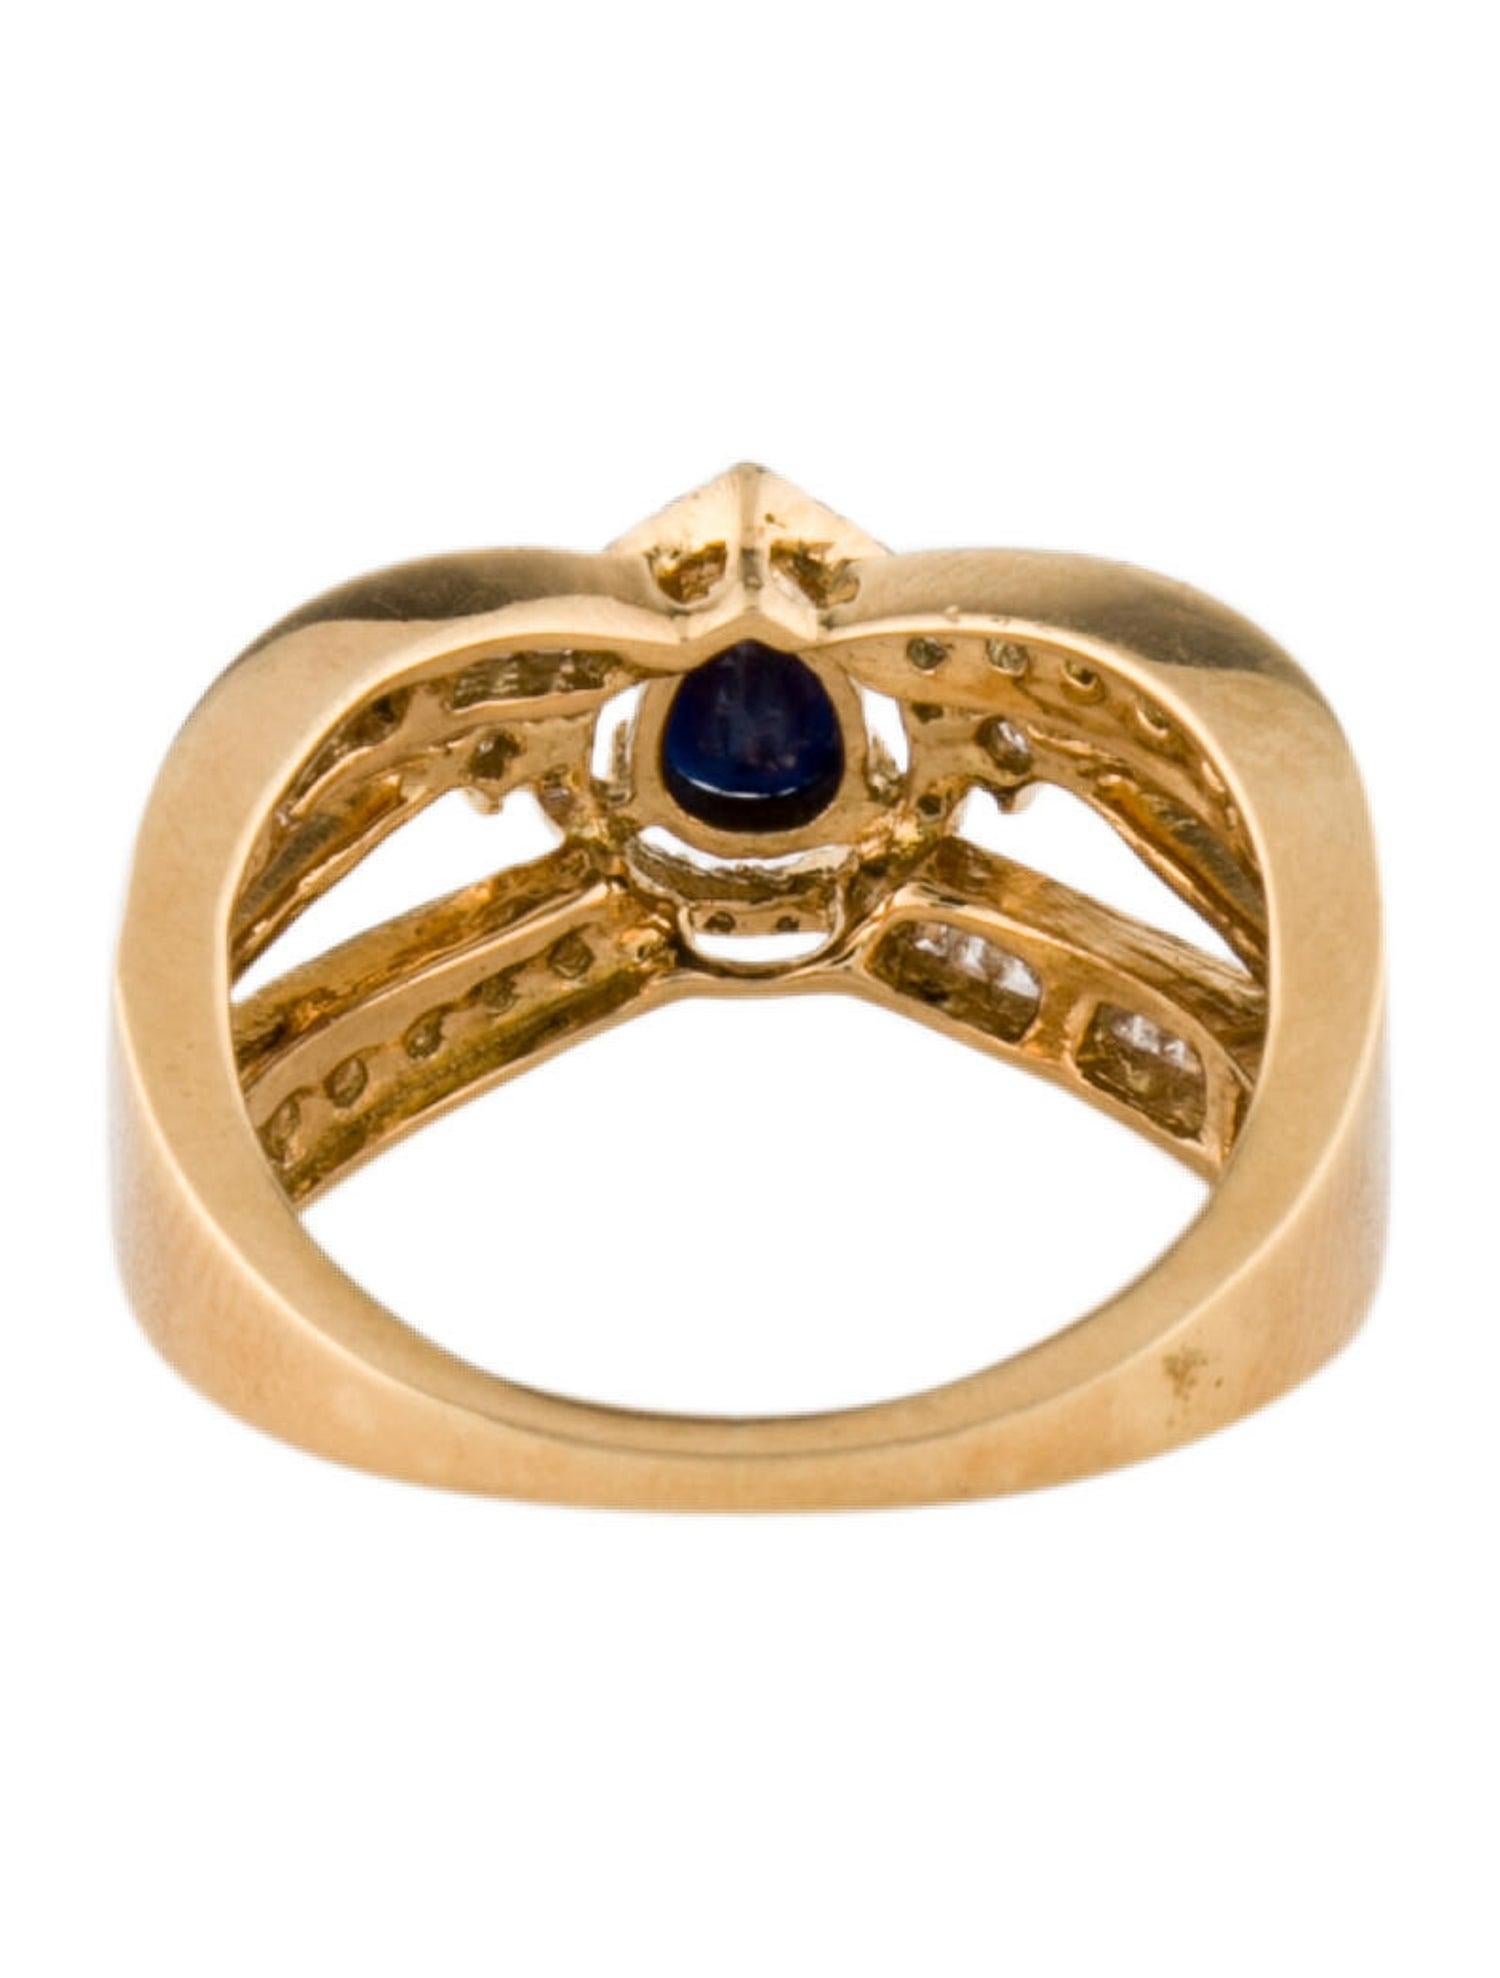 Brilliant Cut 18K Sapphire & Diamond Cocktail Ring Size 6.5 - Elegant, Statement Luxury Design For Sale